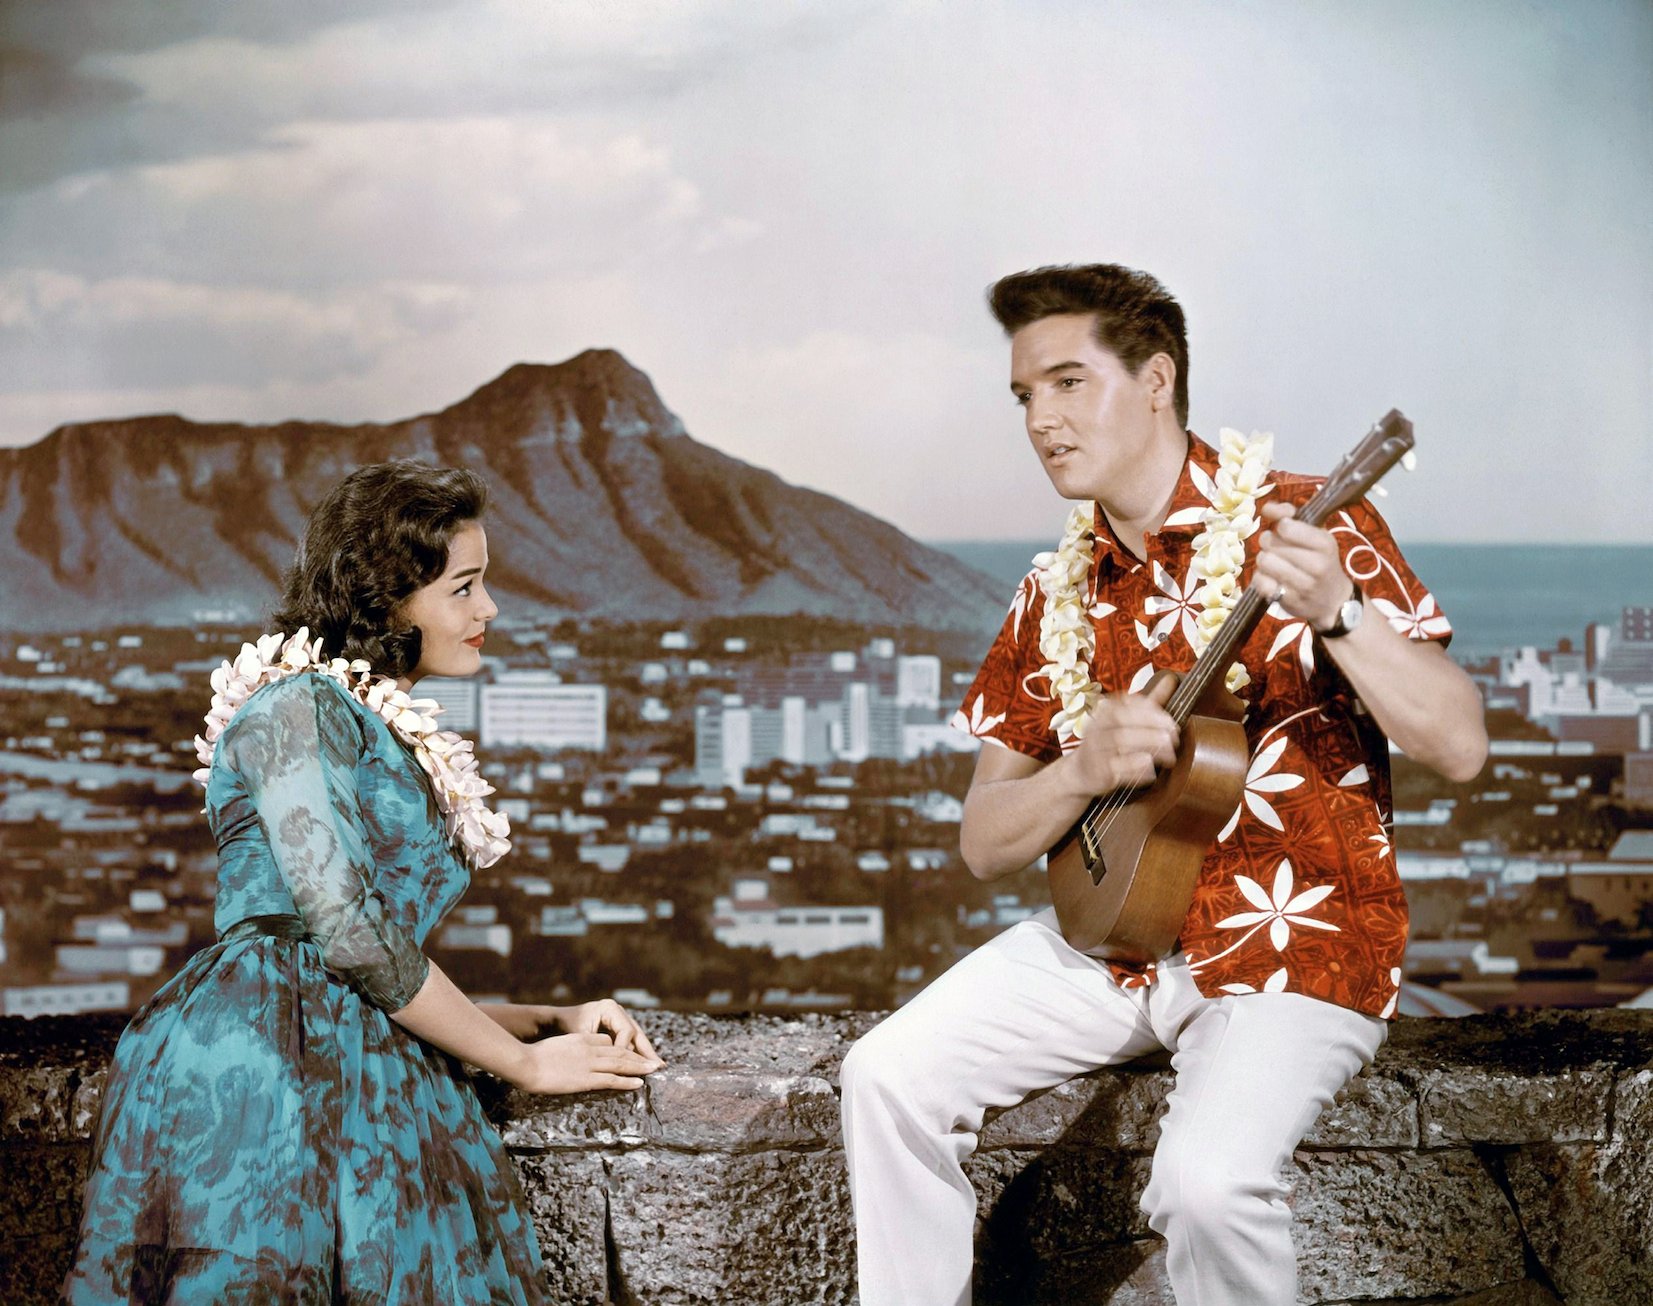 Joan Blackman and Elvis Presley